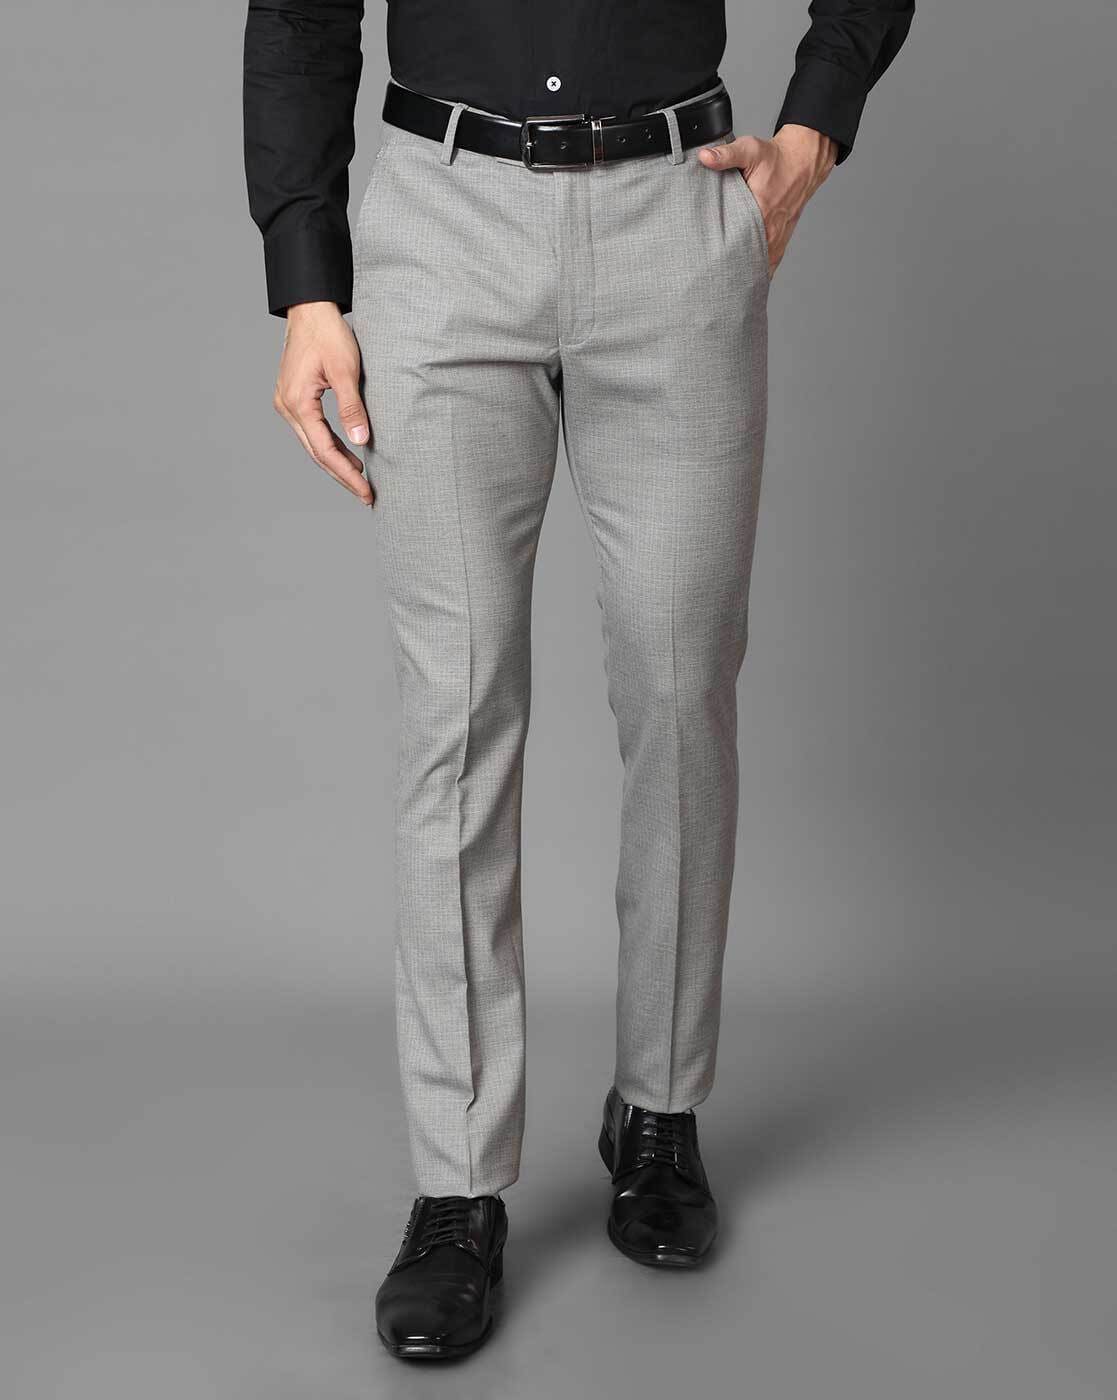 Top more than 70 silver pants mens super hot - in.eteachers